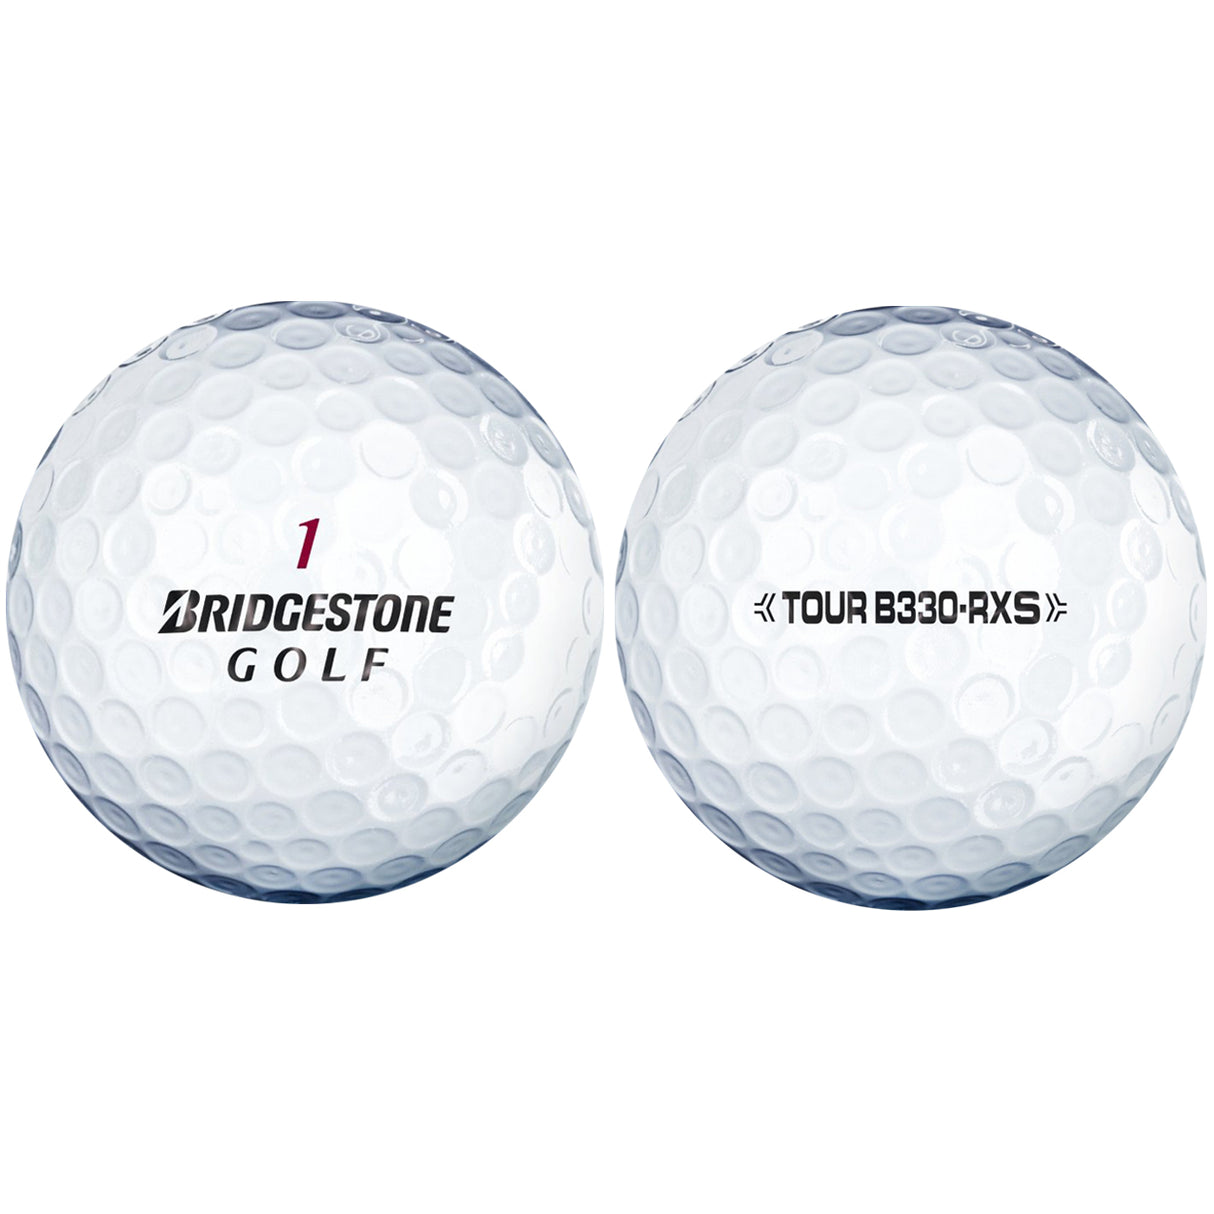 Bridgestone Tour B330-RXS Golf Balls - Refinished / Mint (3 Dozen • 36 Balls)